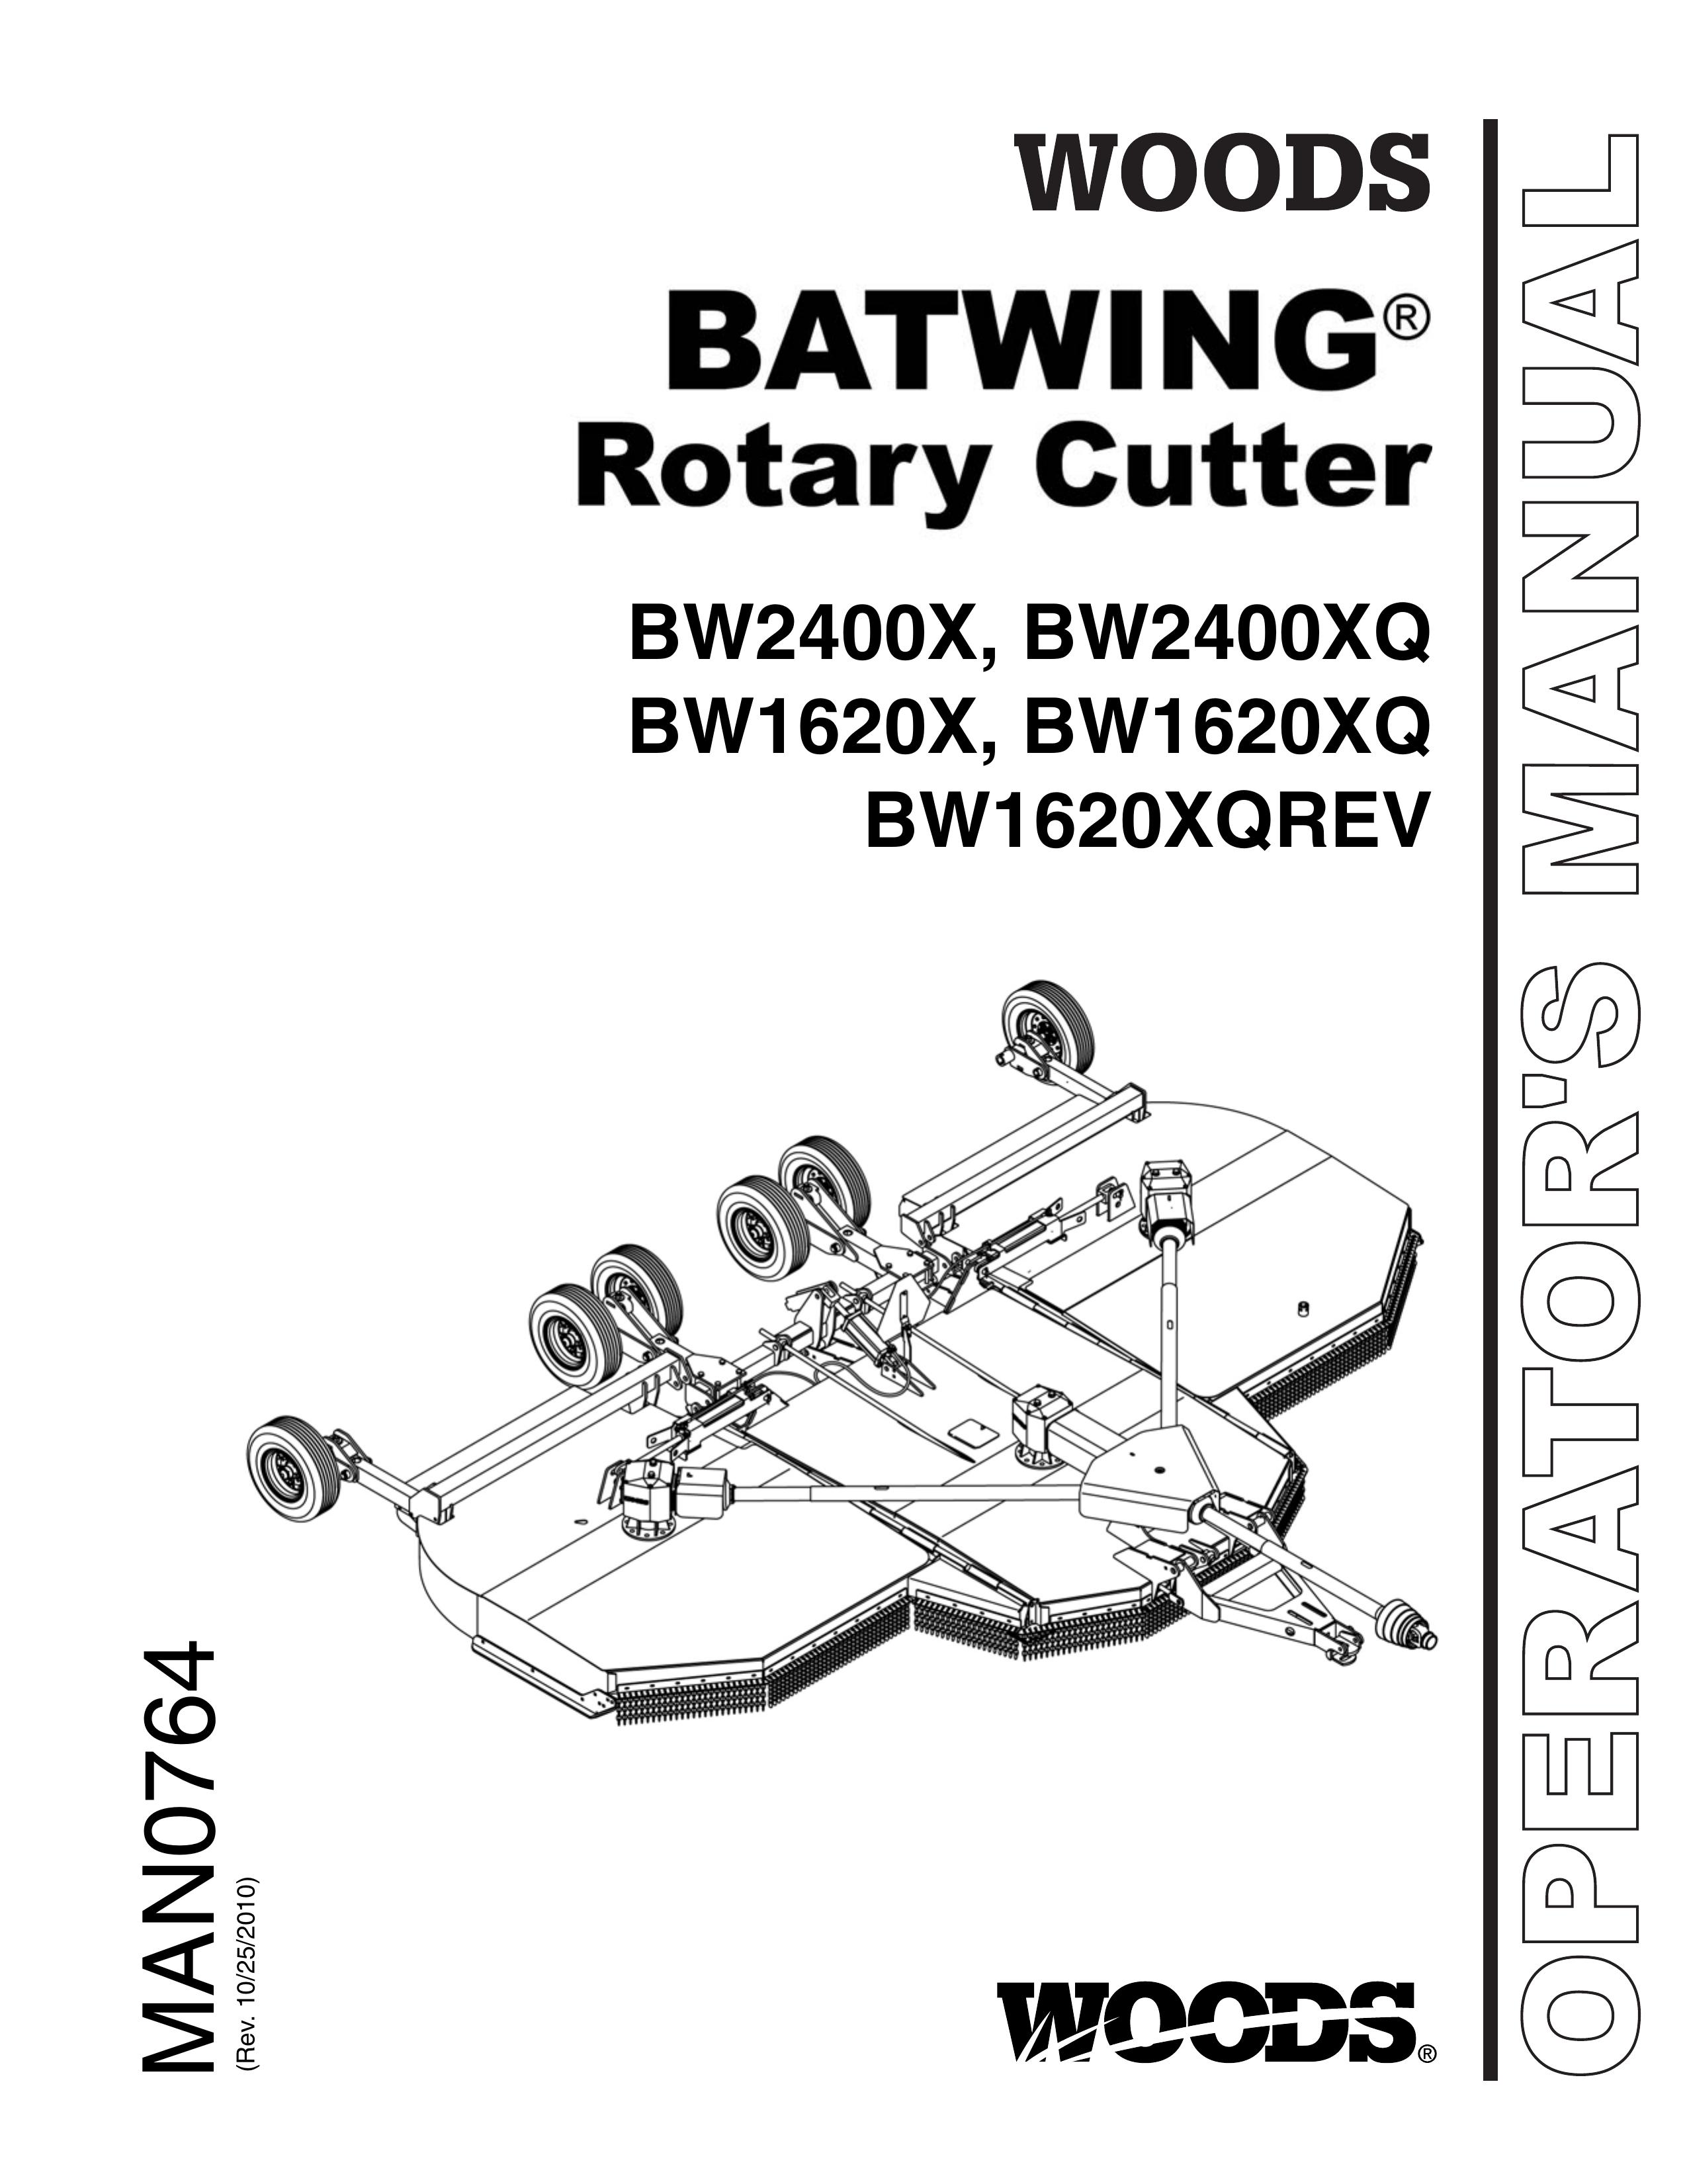 Woods Equipment BW1620XQREV Brush Cutter User Manual